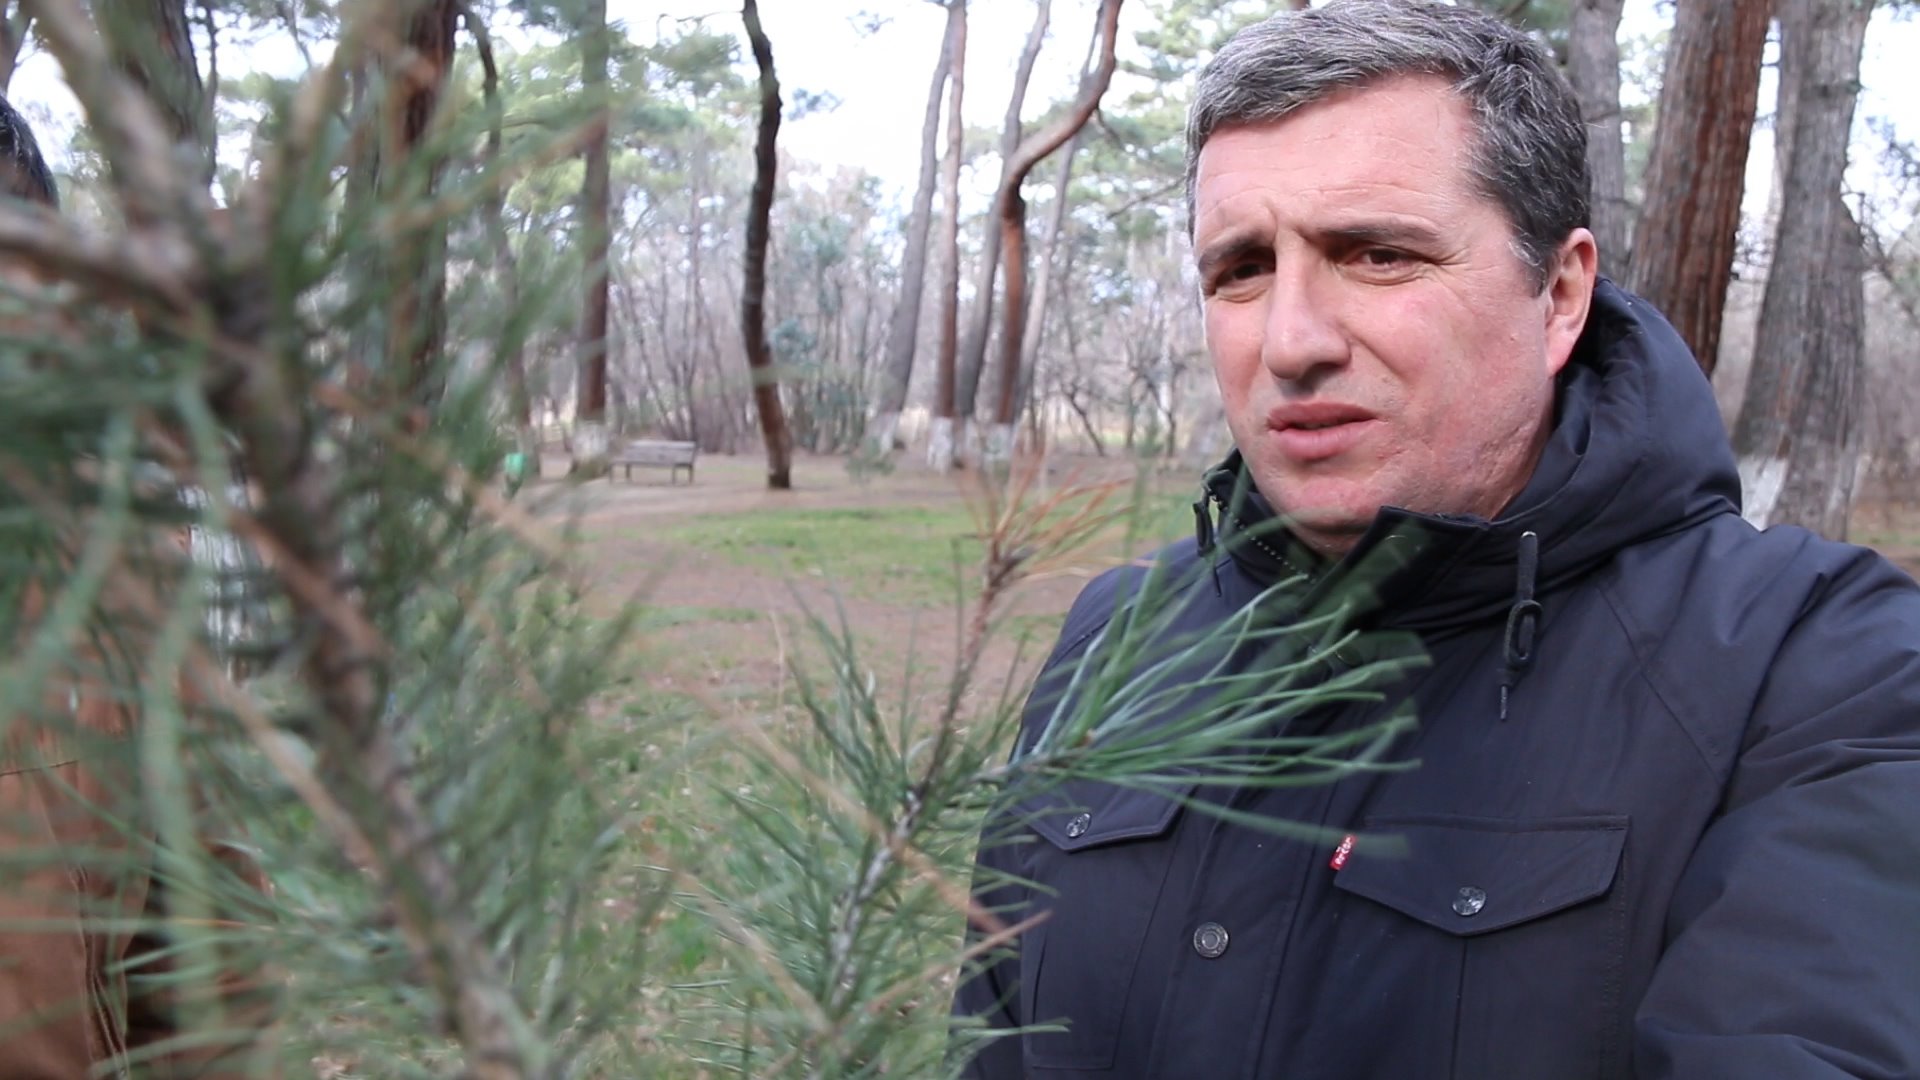 Meet the Forester - Ivane Betsuklishvili, Forester